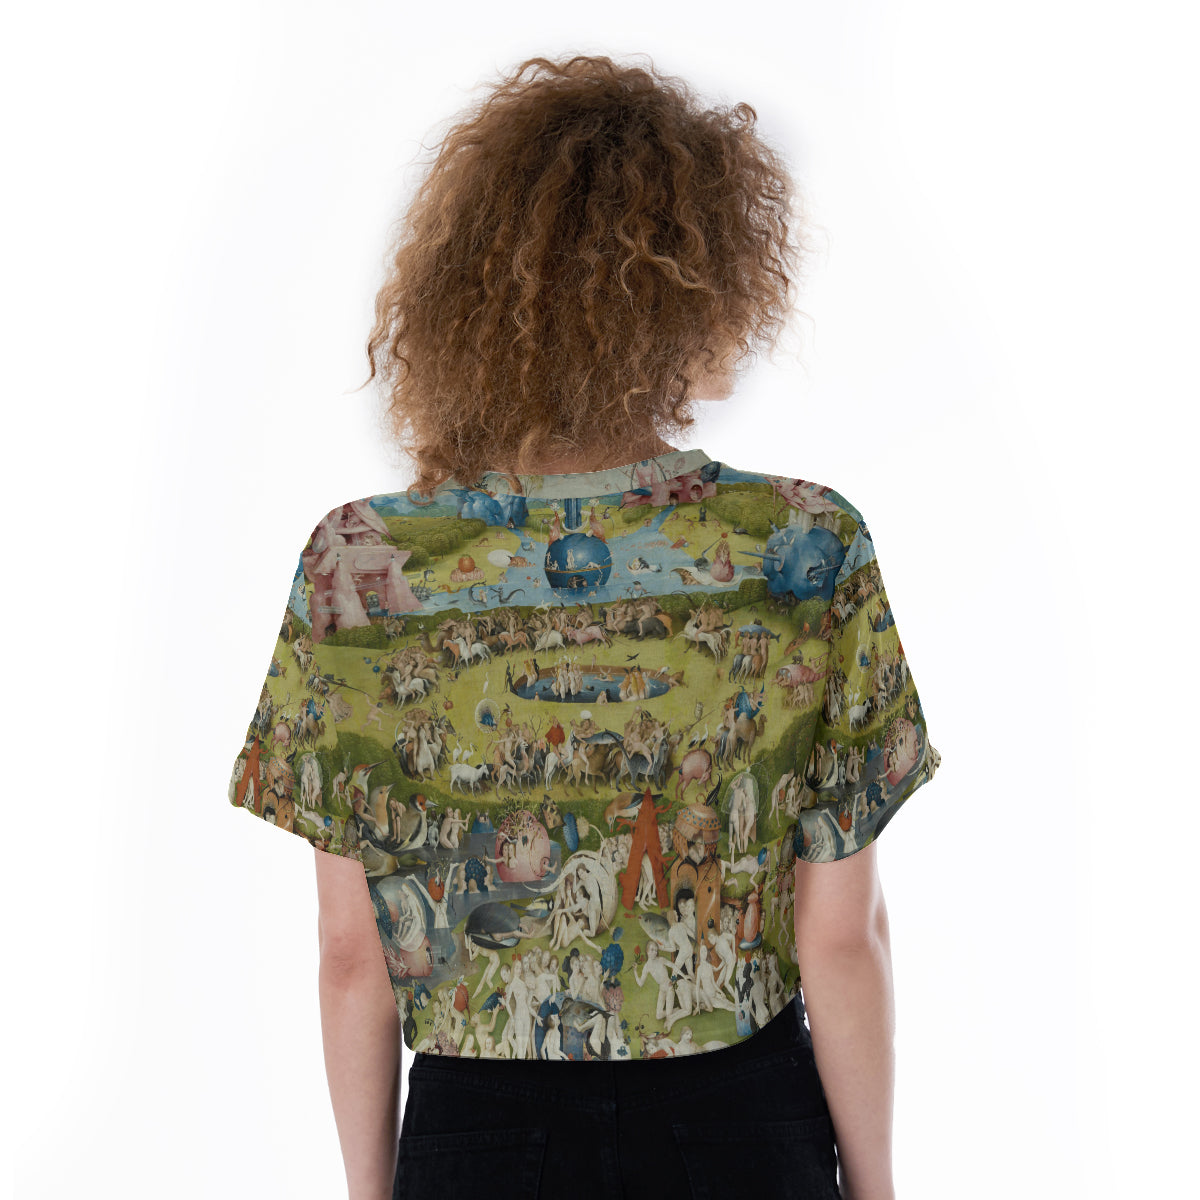 El bosco Shirt - Hieronymuns Bosch Aesthetic Art crop top